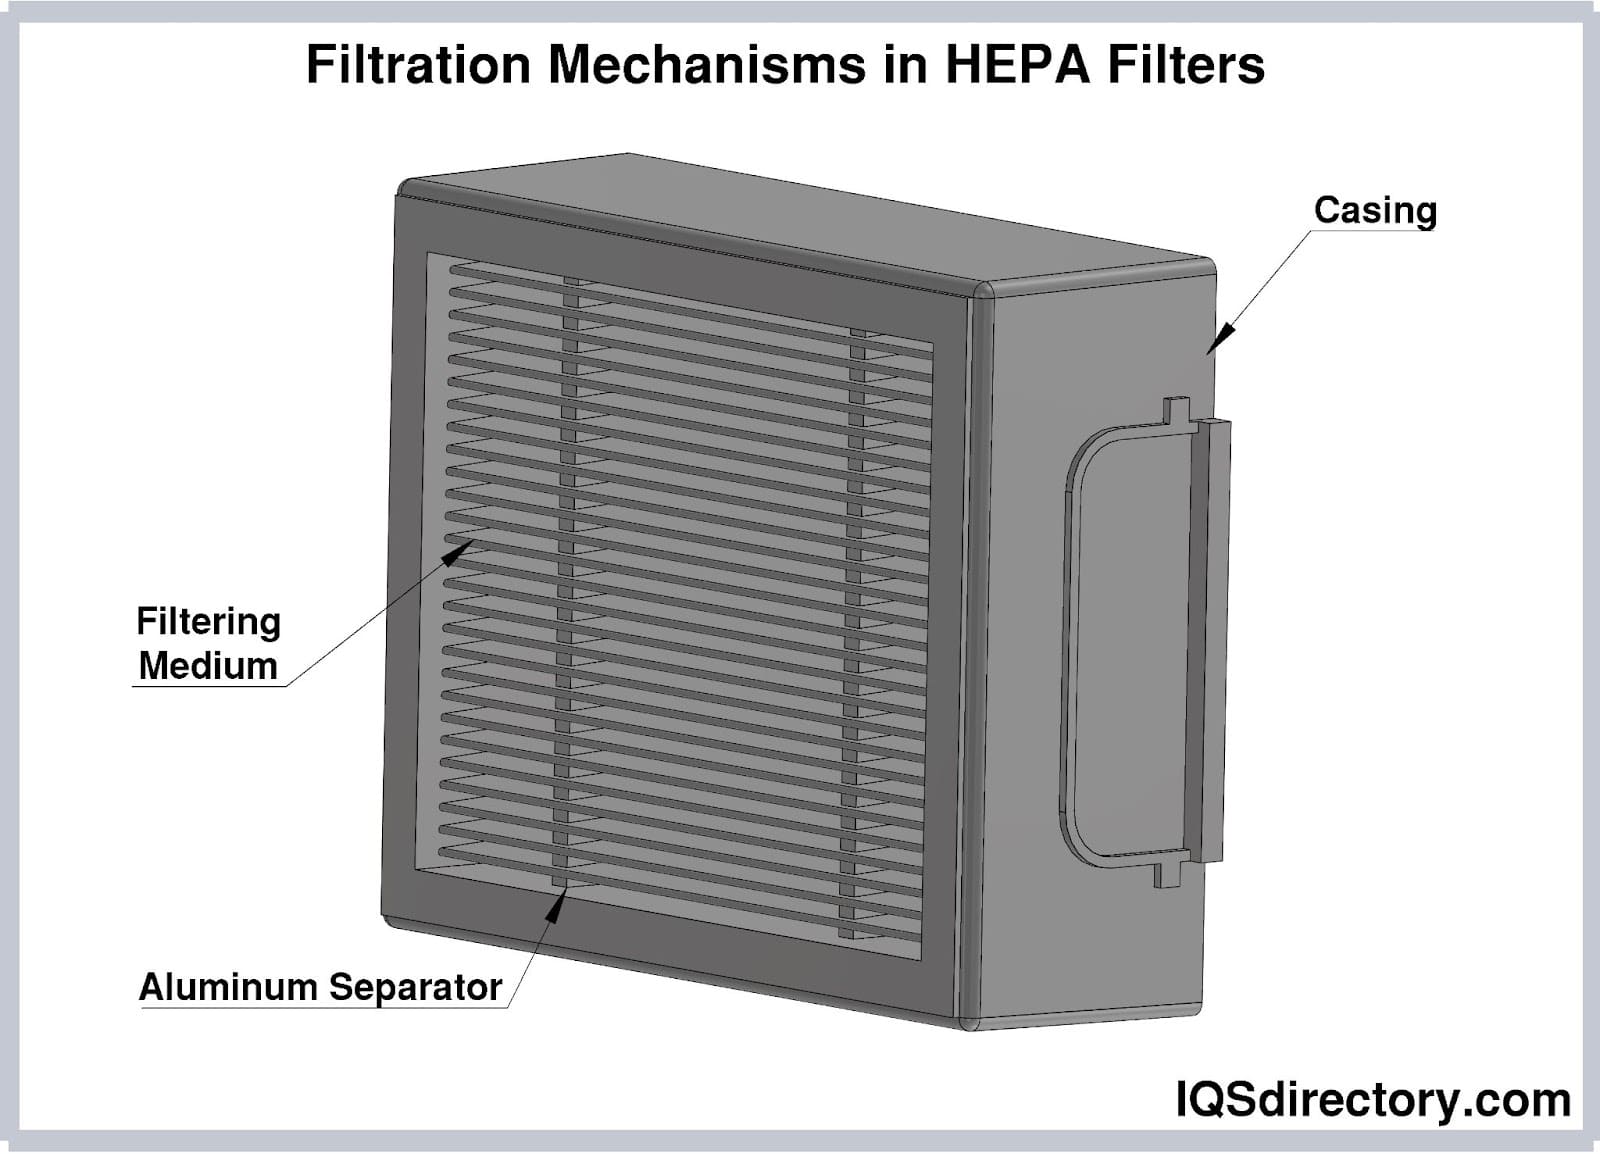 Filtration Mechanisms in HEPA Filters